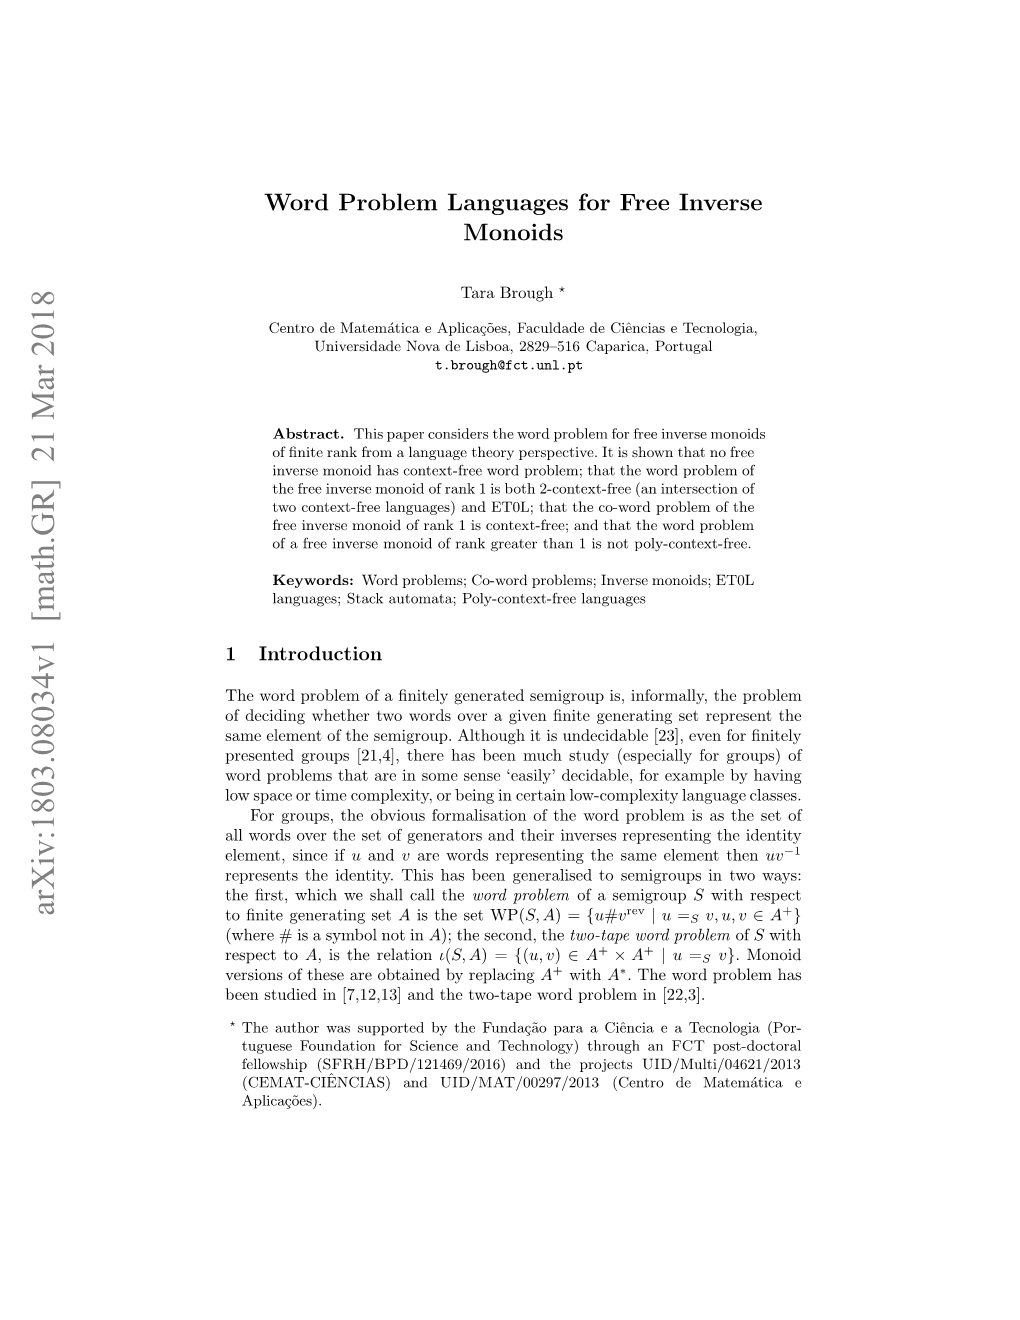 Word Problem Languages for Free Inverse Monoids